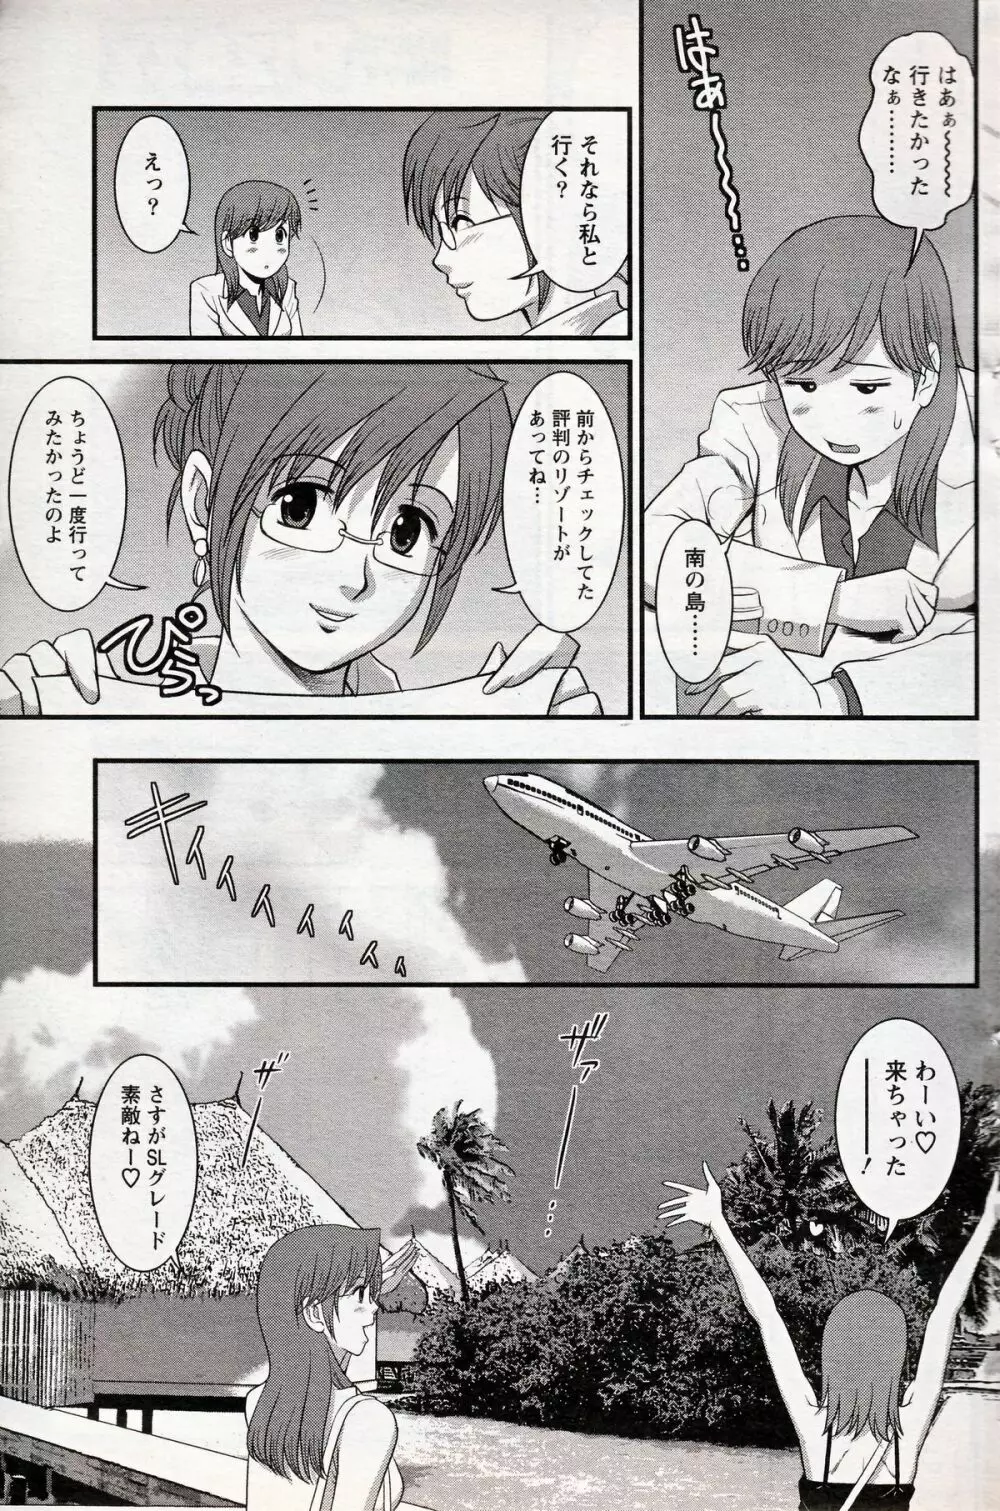 Haken no Muuko-san 16 7ページ